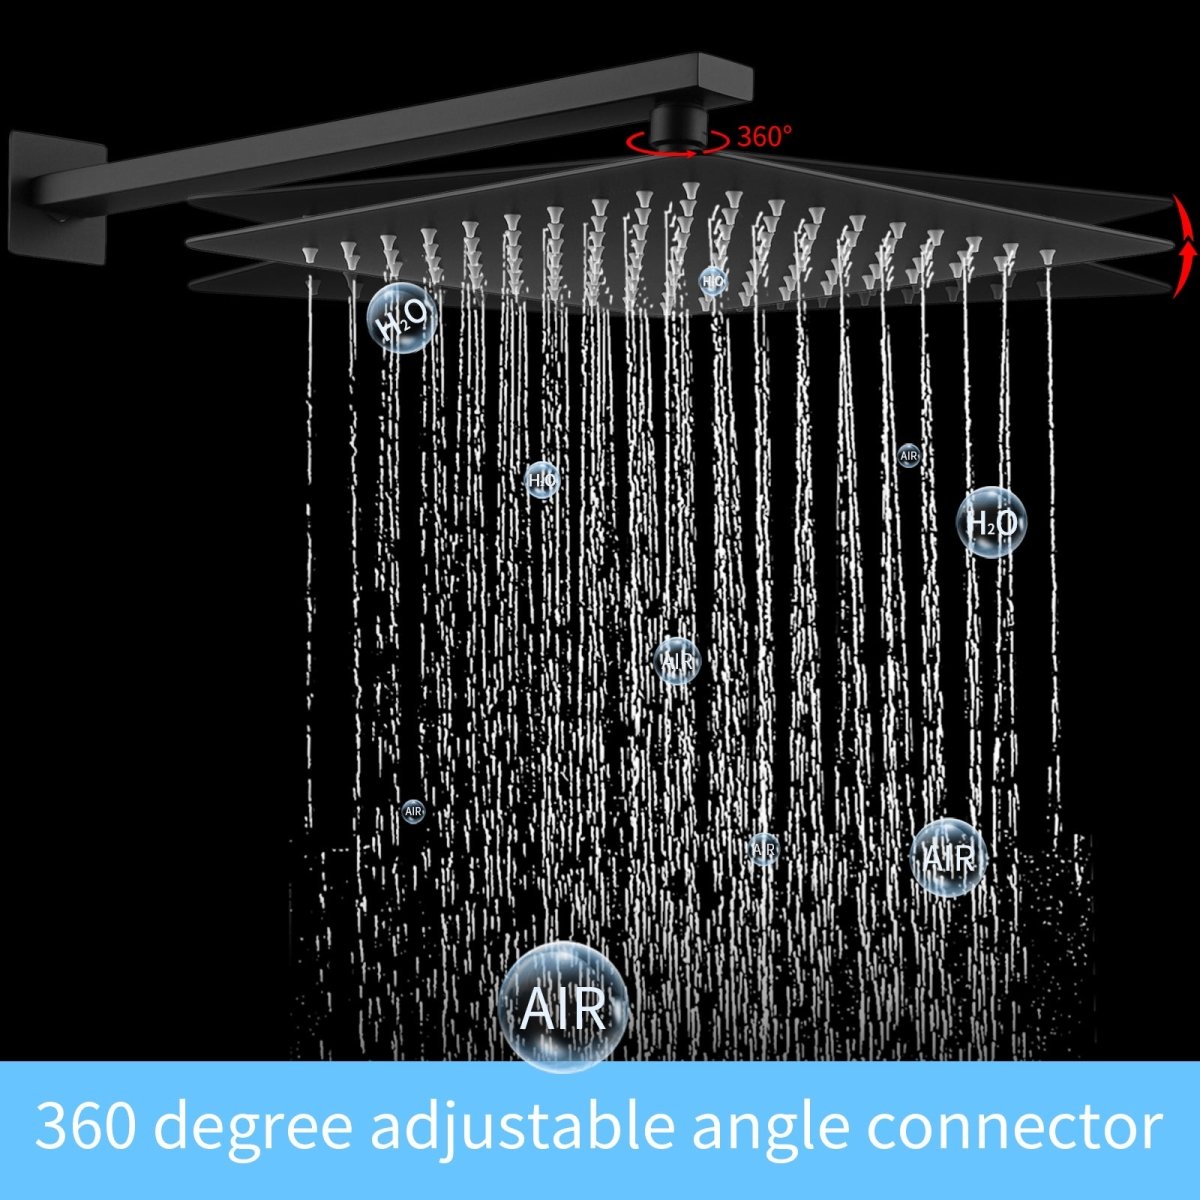 ExBrite Shower System Shower Faucet Combo Set Wall Mounted with 12" Rainfall Shower Head Set Matt Black Finish - ExBriteUSA